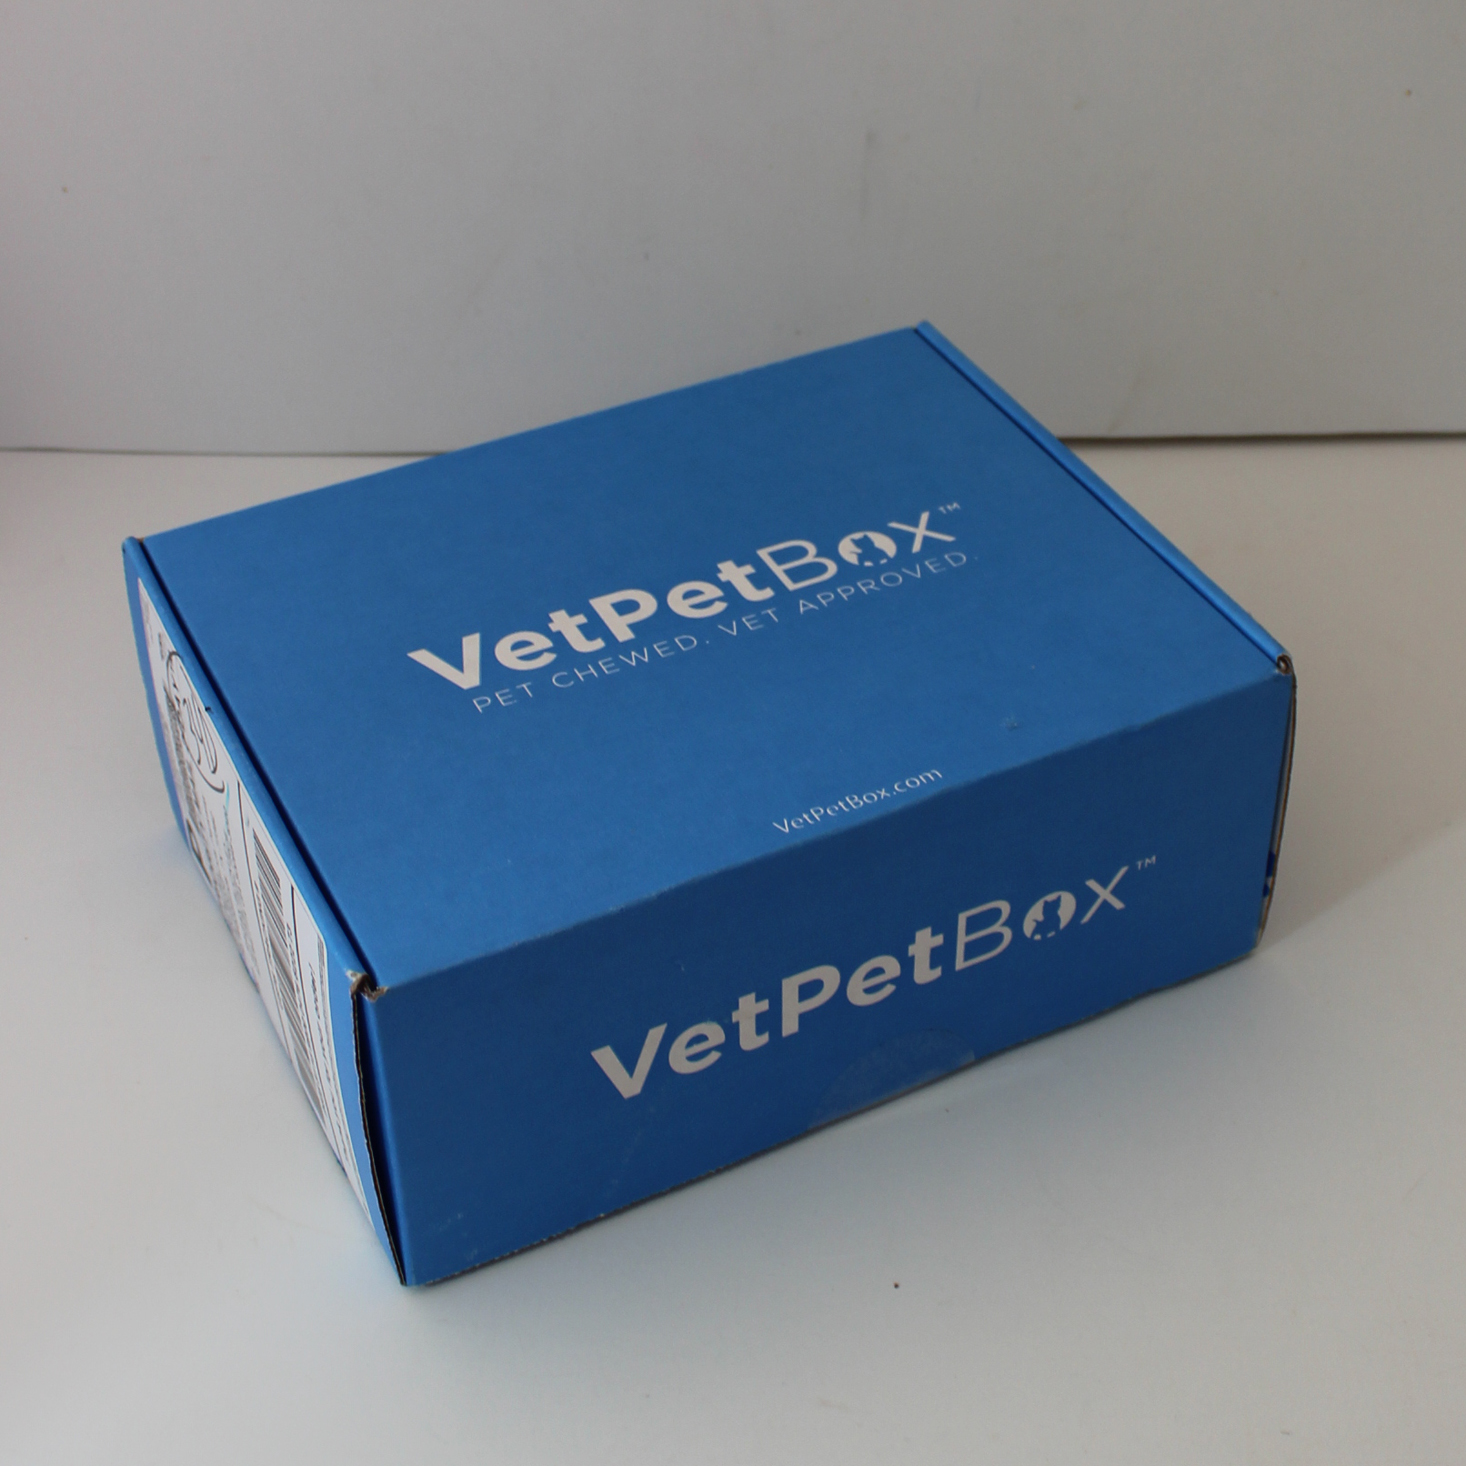 Vet Pet Box Cat October 2019 Box